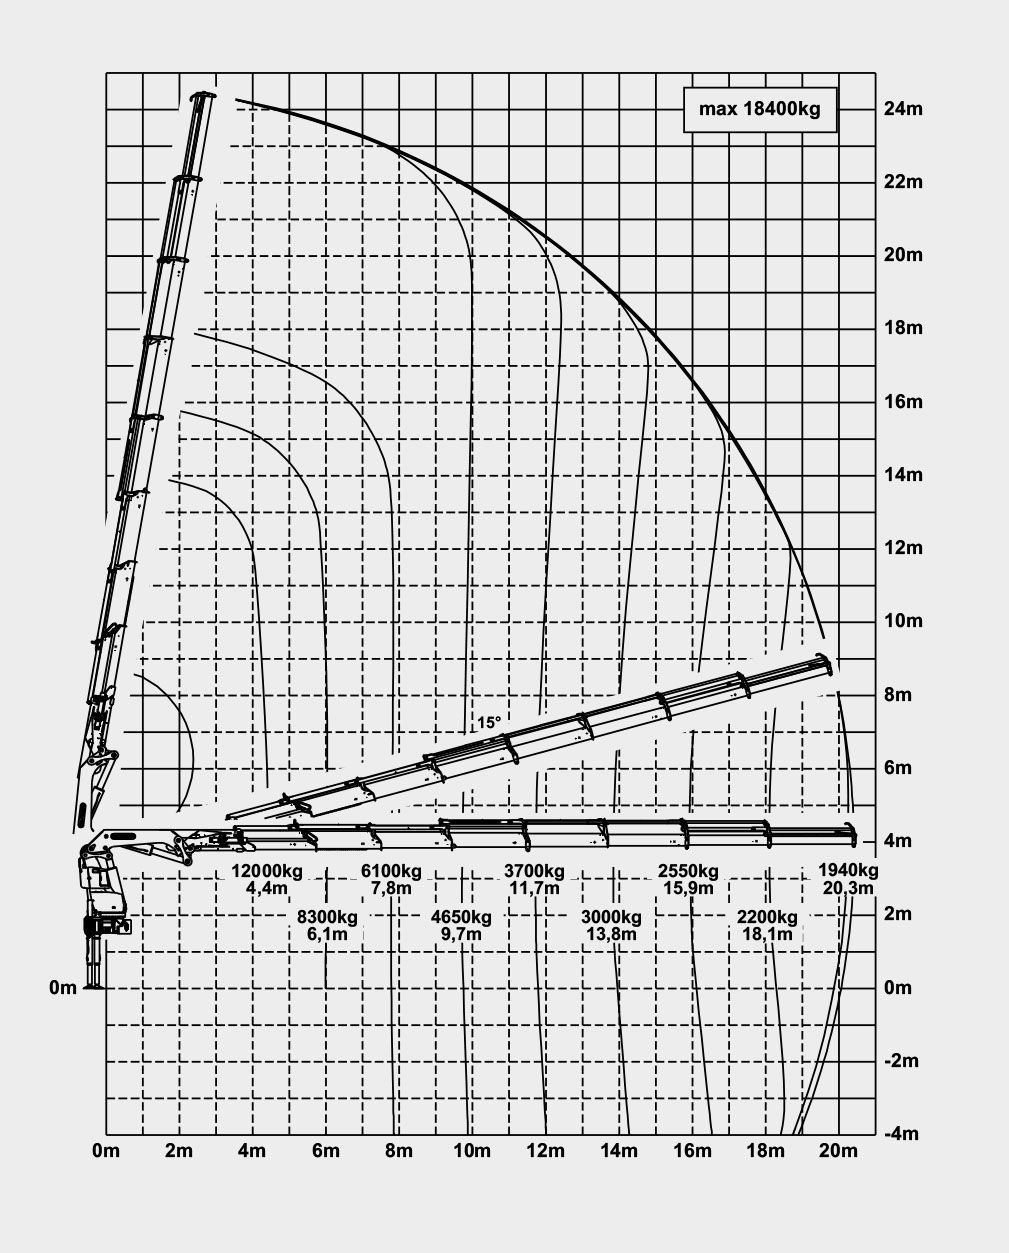 Hiab 322 Load Chart